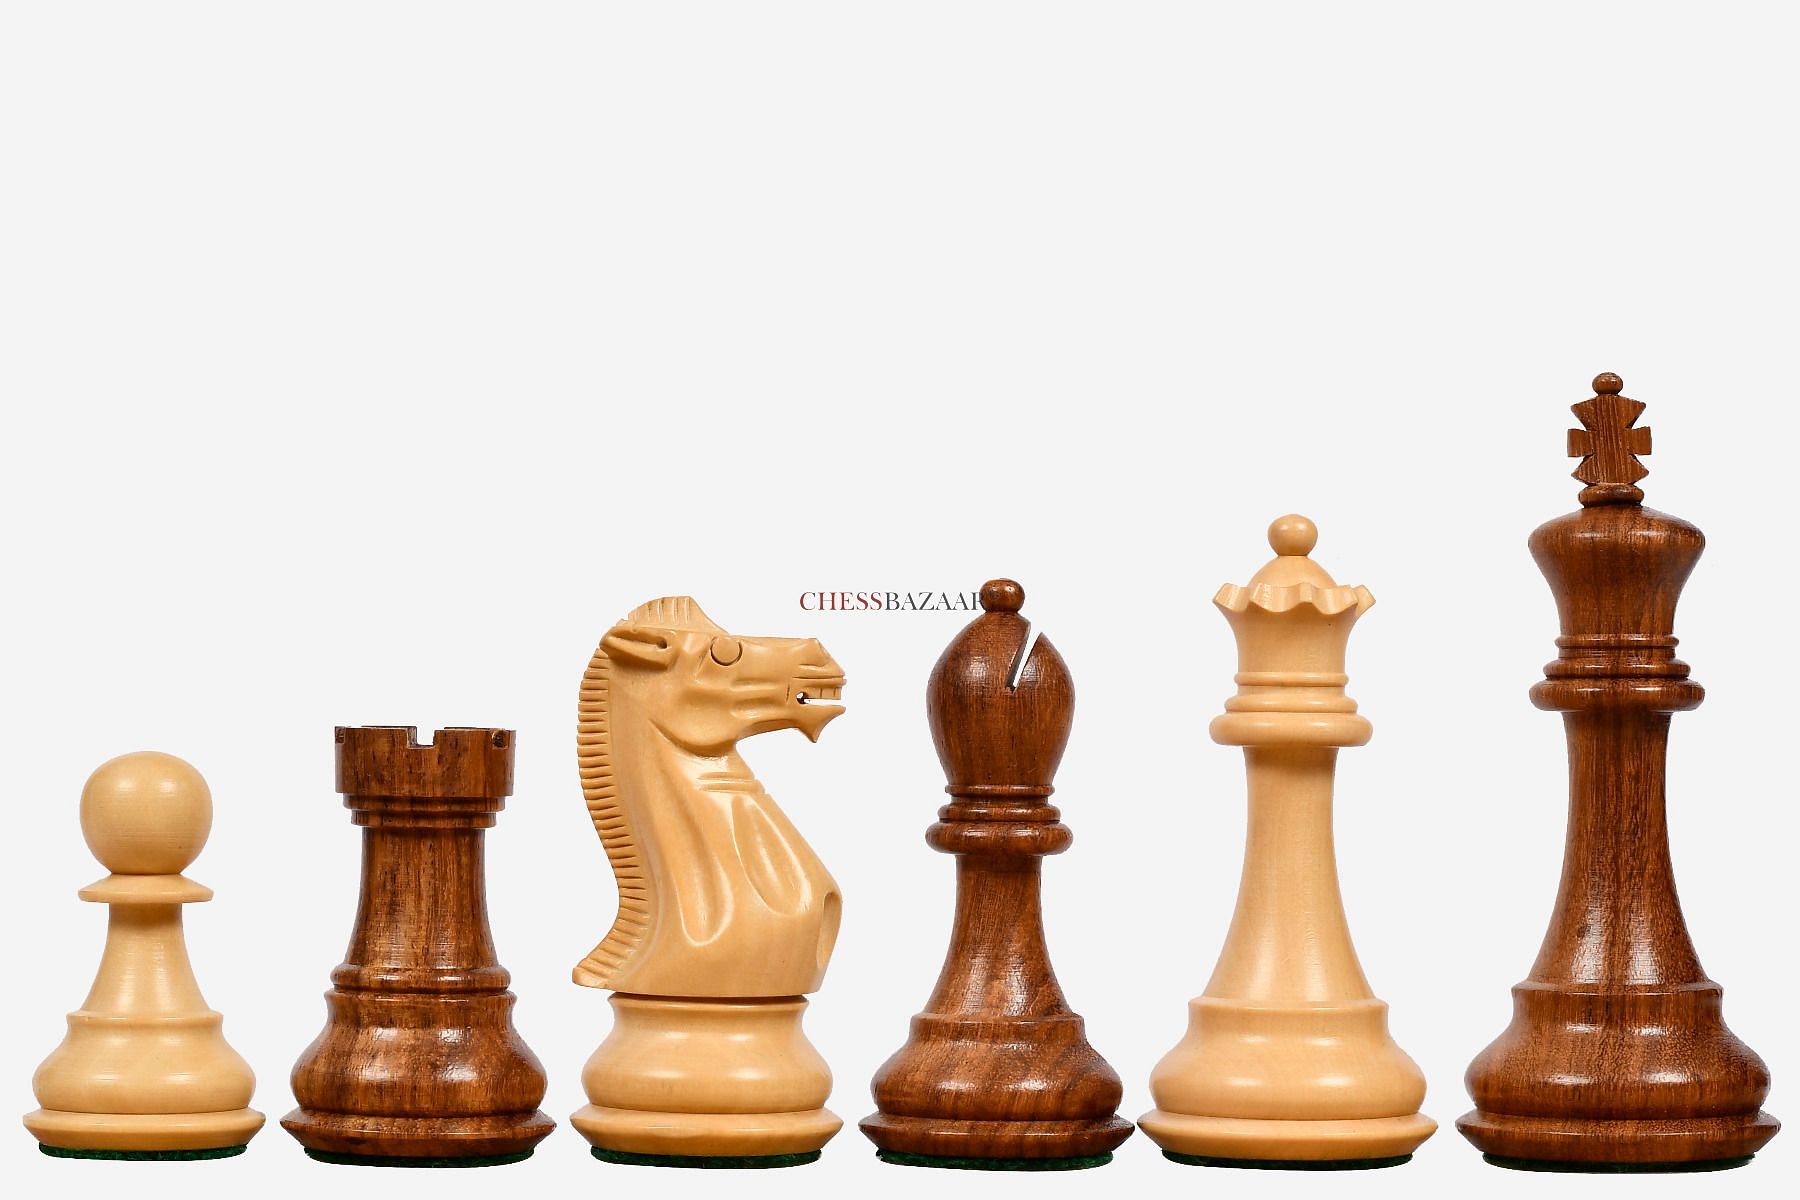 Buy Desert Gold Staunton Series Wooden Chess Set in Sheesham Online